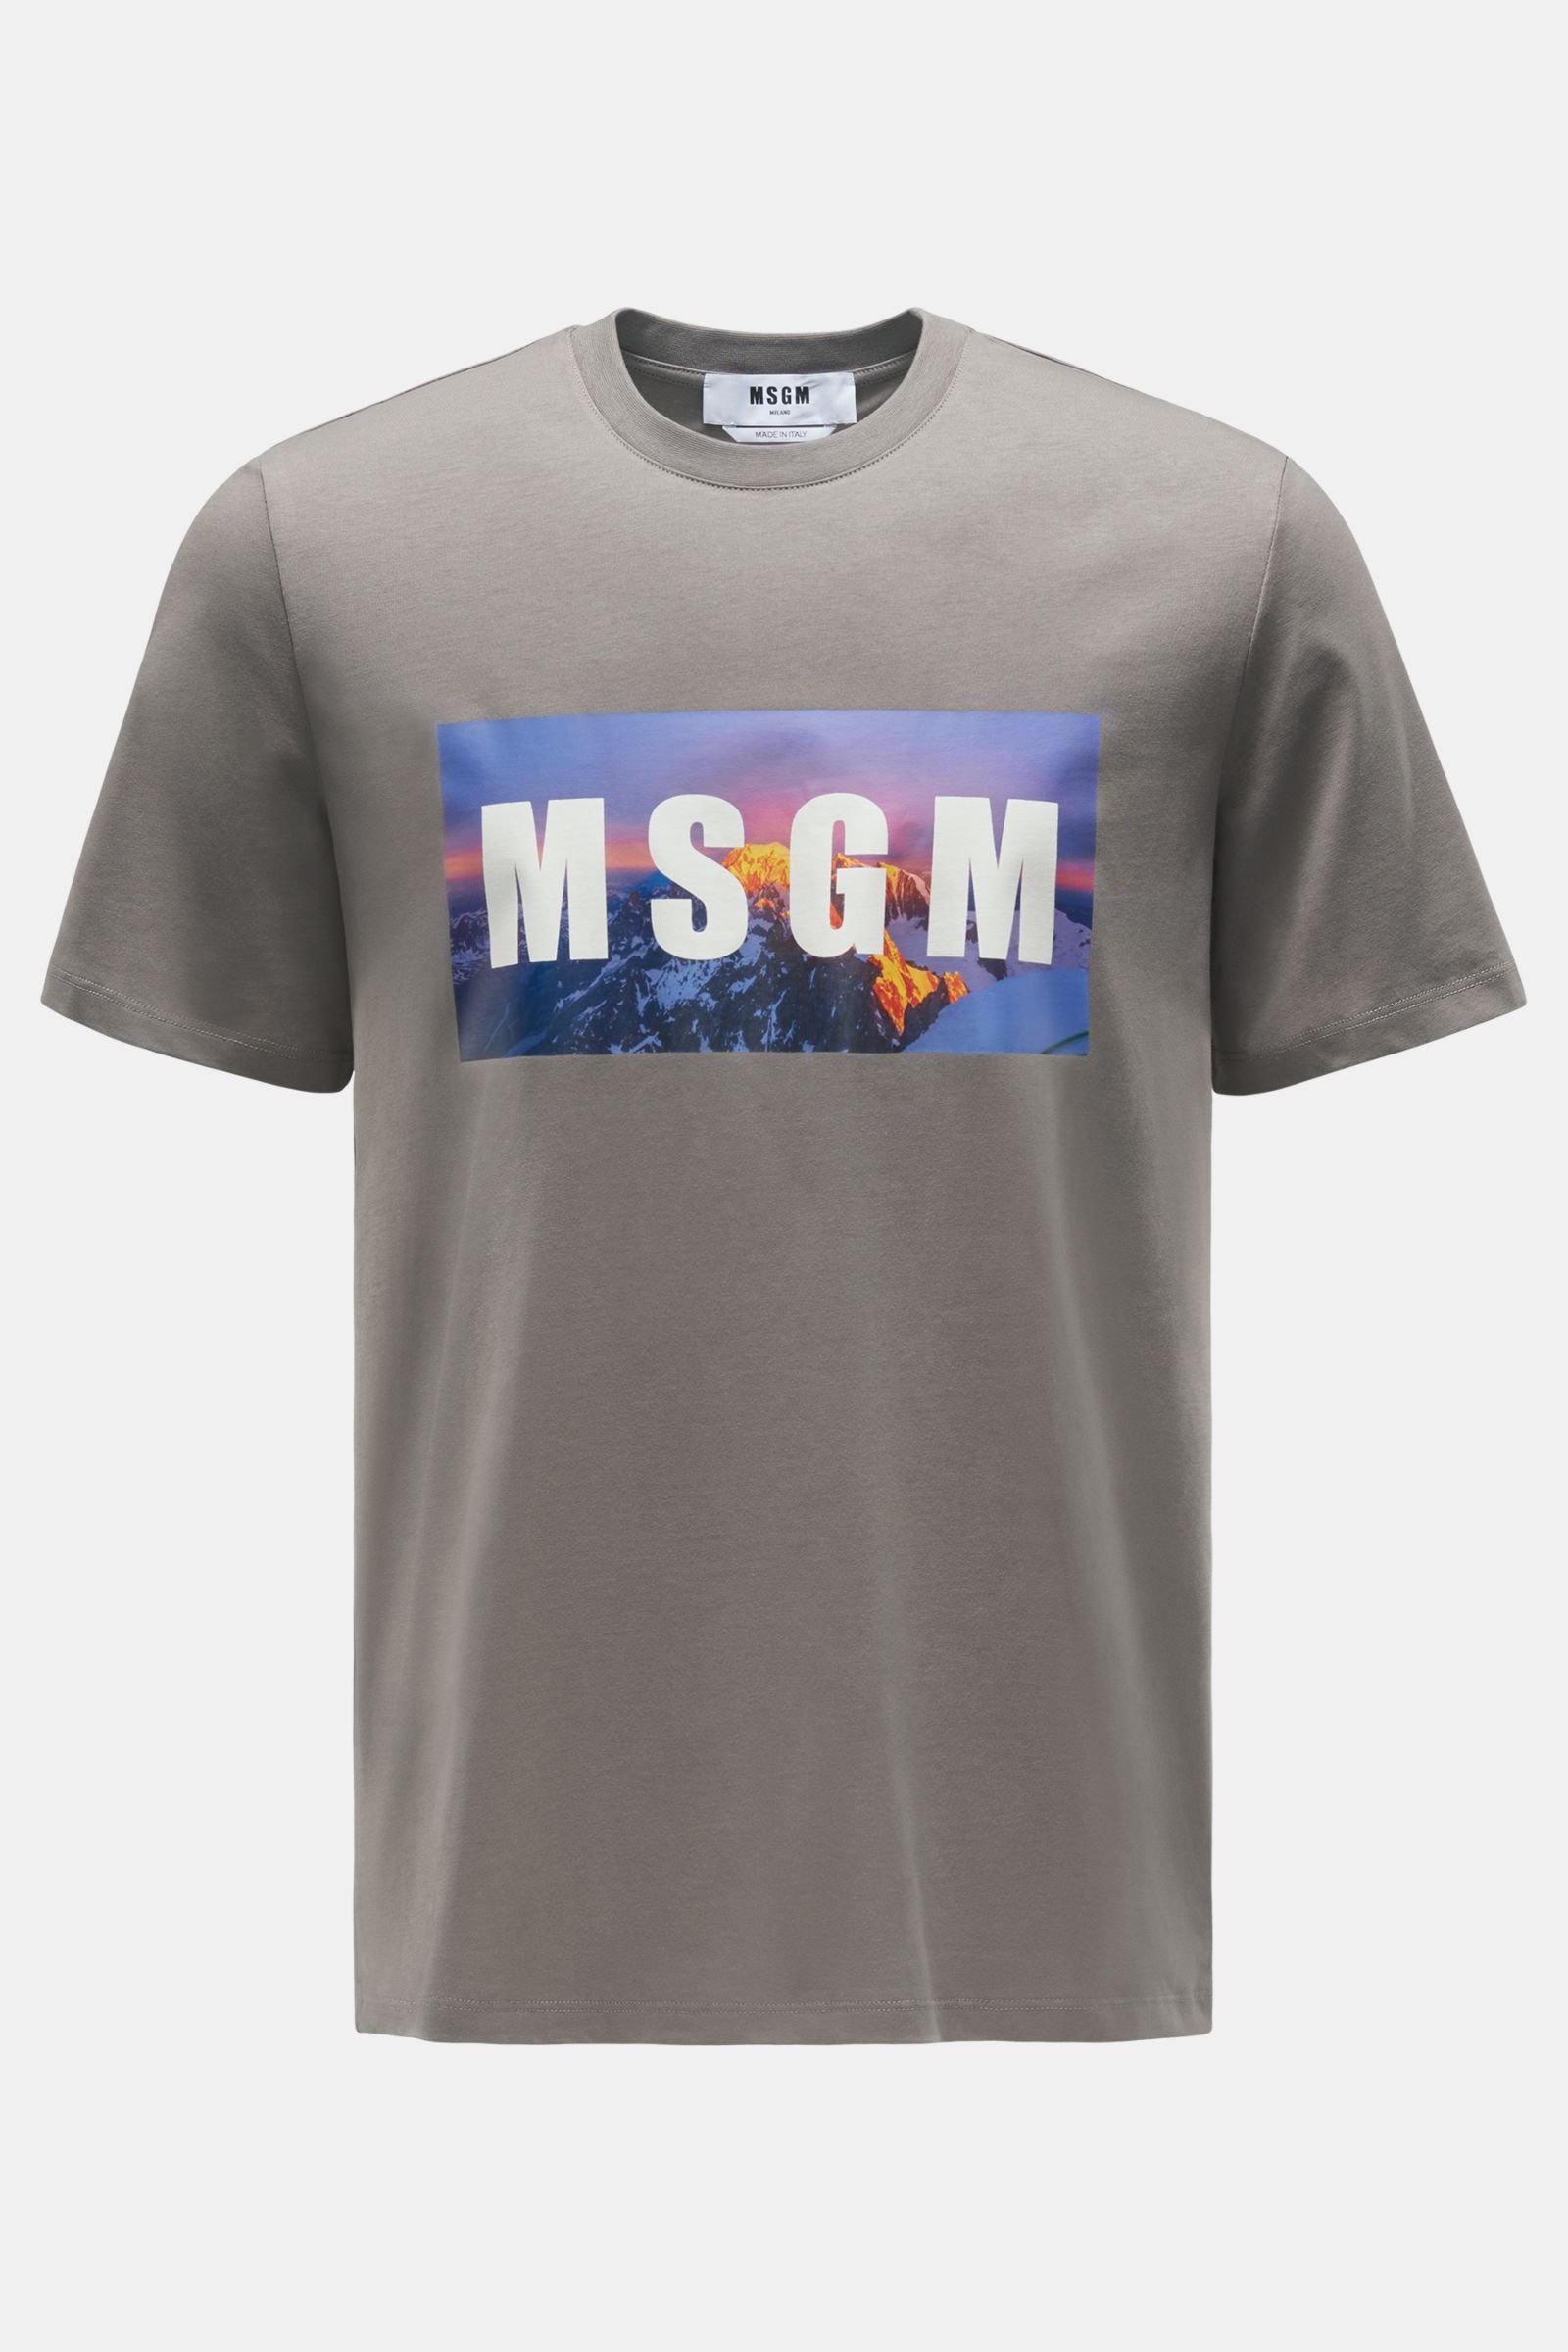 MSGM crew neck T-shirt grey BRAUN Hamburg